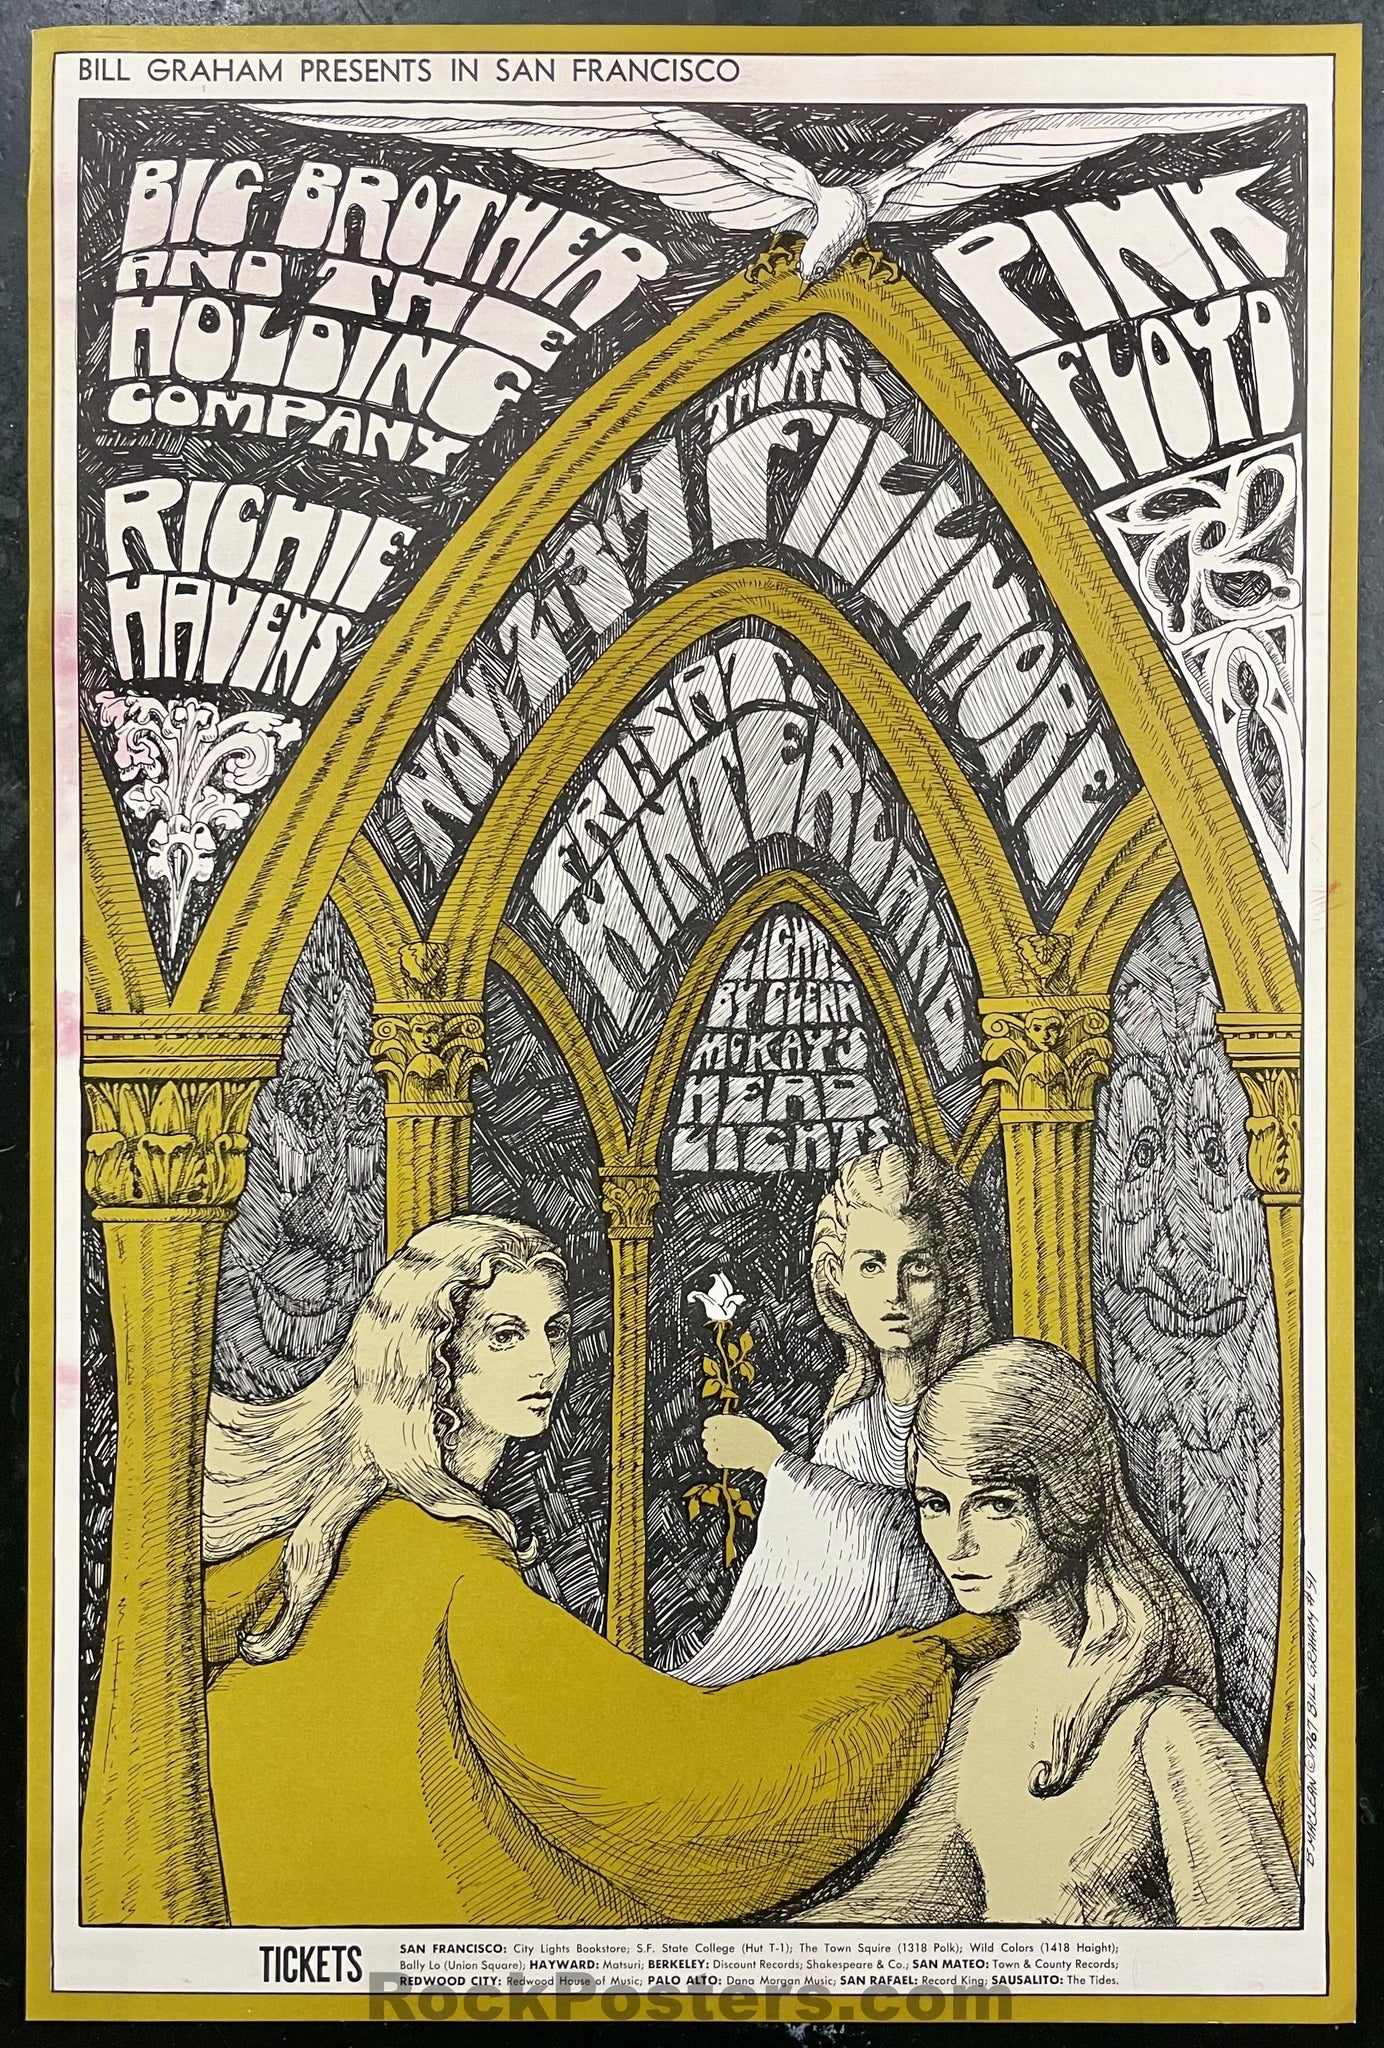 AUCTION - BG-91 - Pink Floyd Janis Joplin - Missing Color Variant - 1967 Poster - Fillmore & Winterland - Near Mint Minus